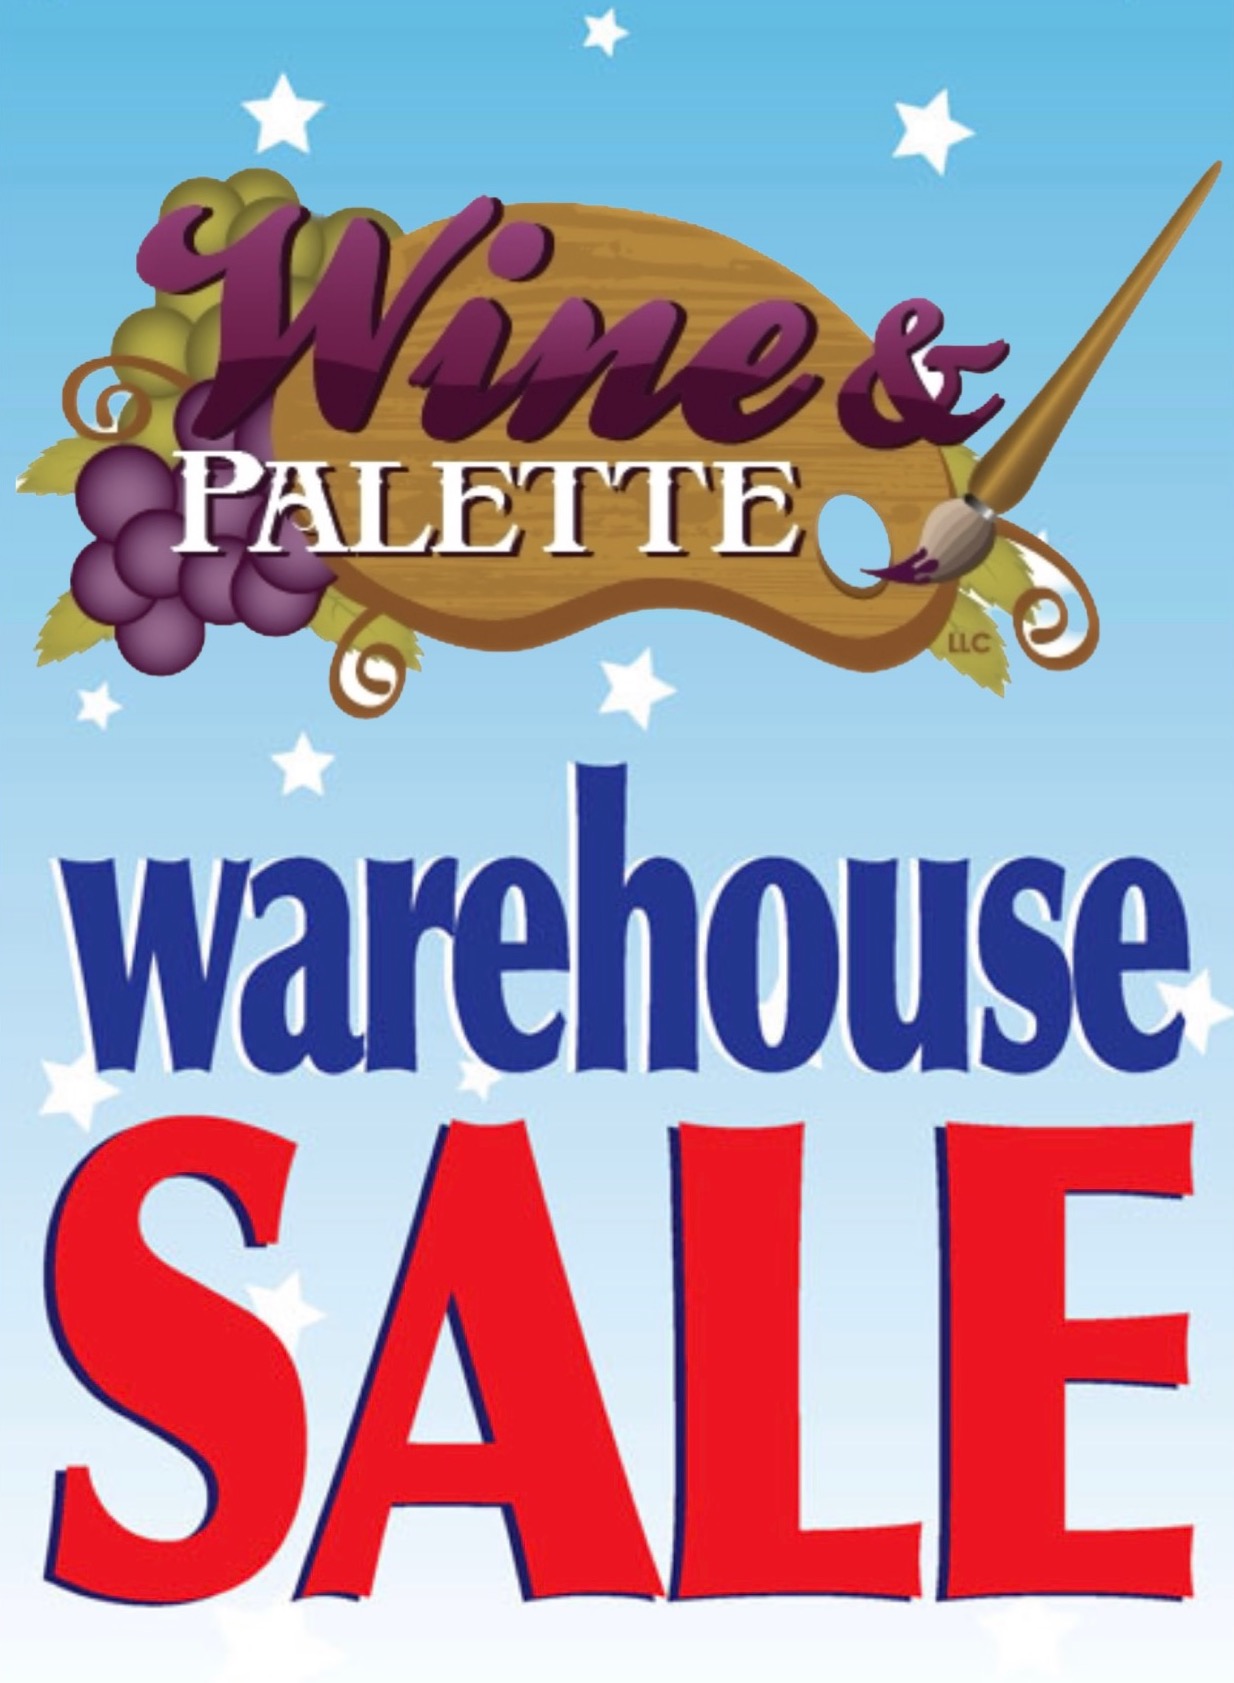 Wine & Palette Warehouse Sale Event!